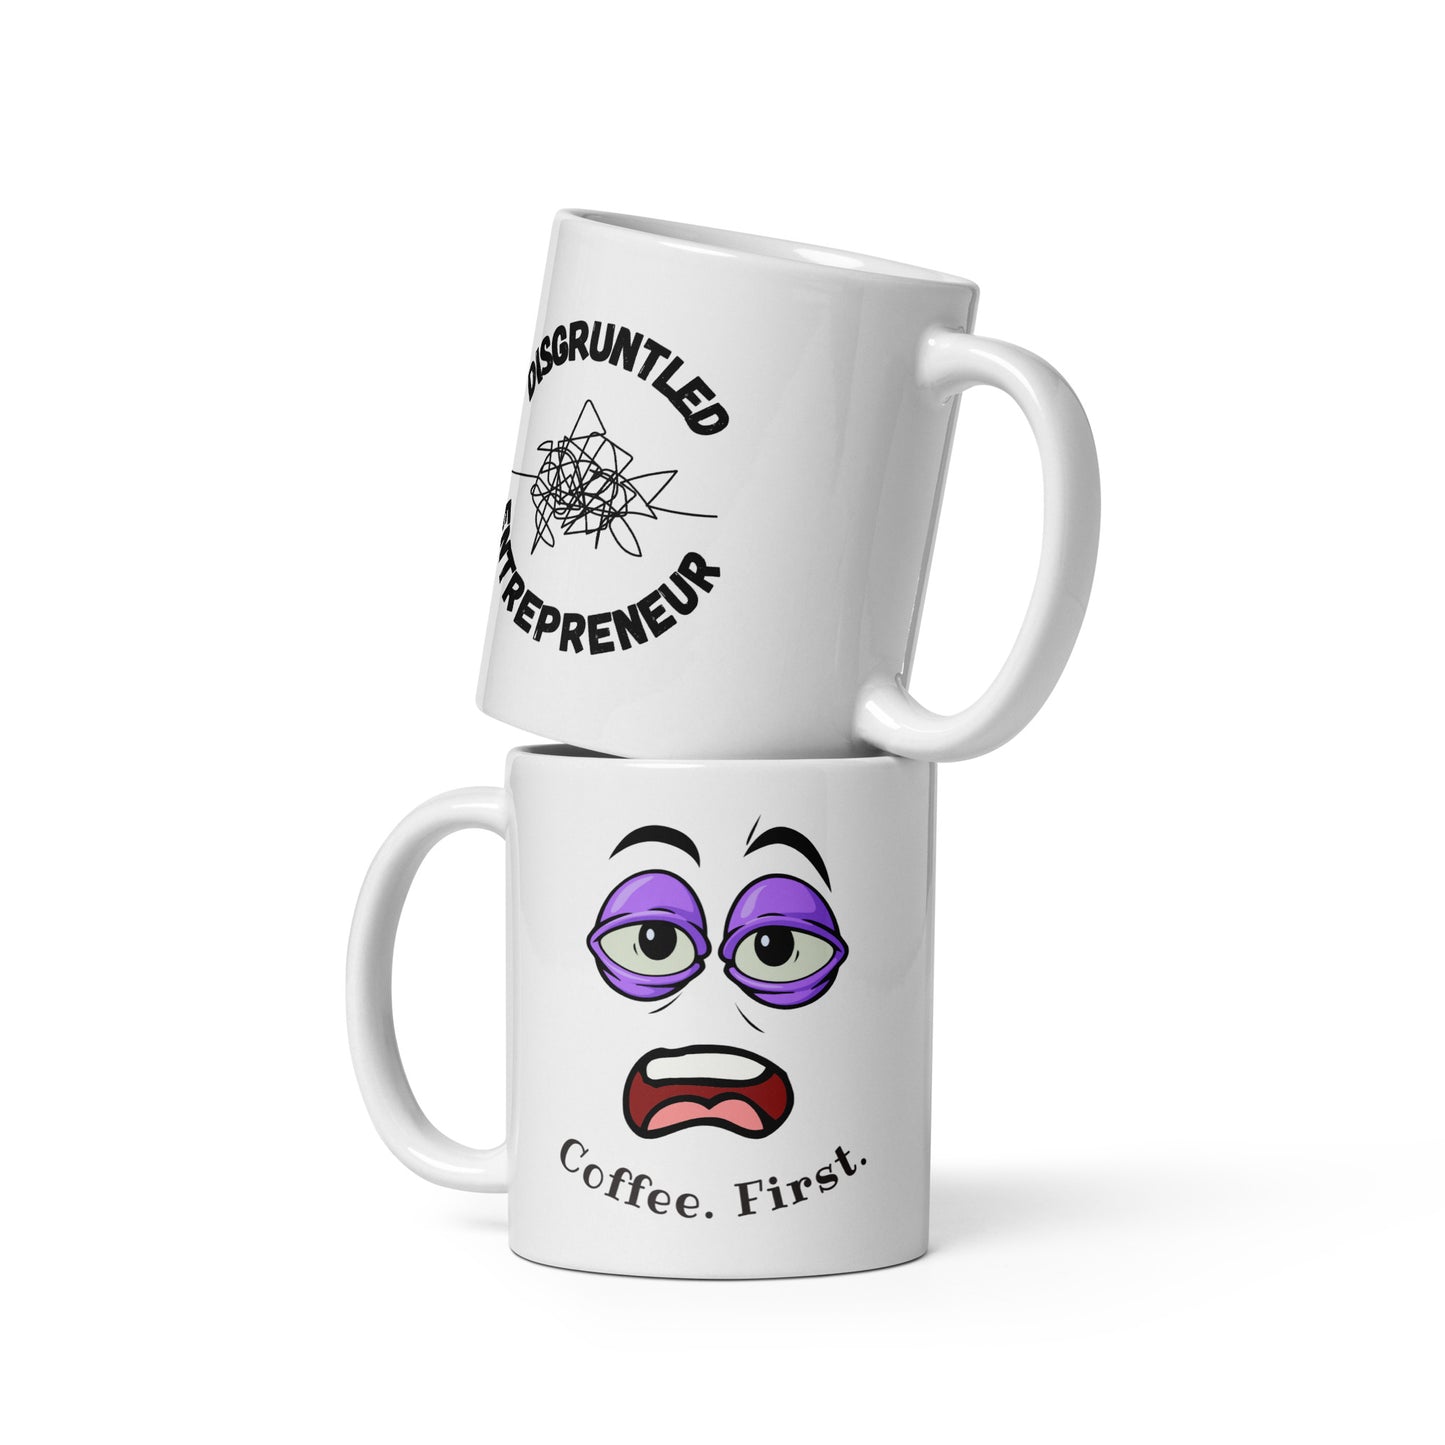 Coffee First Mug for Entrepreneurs